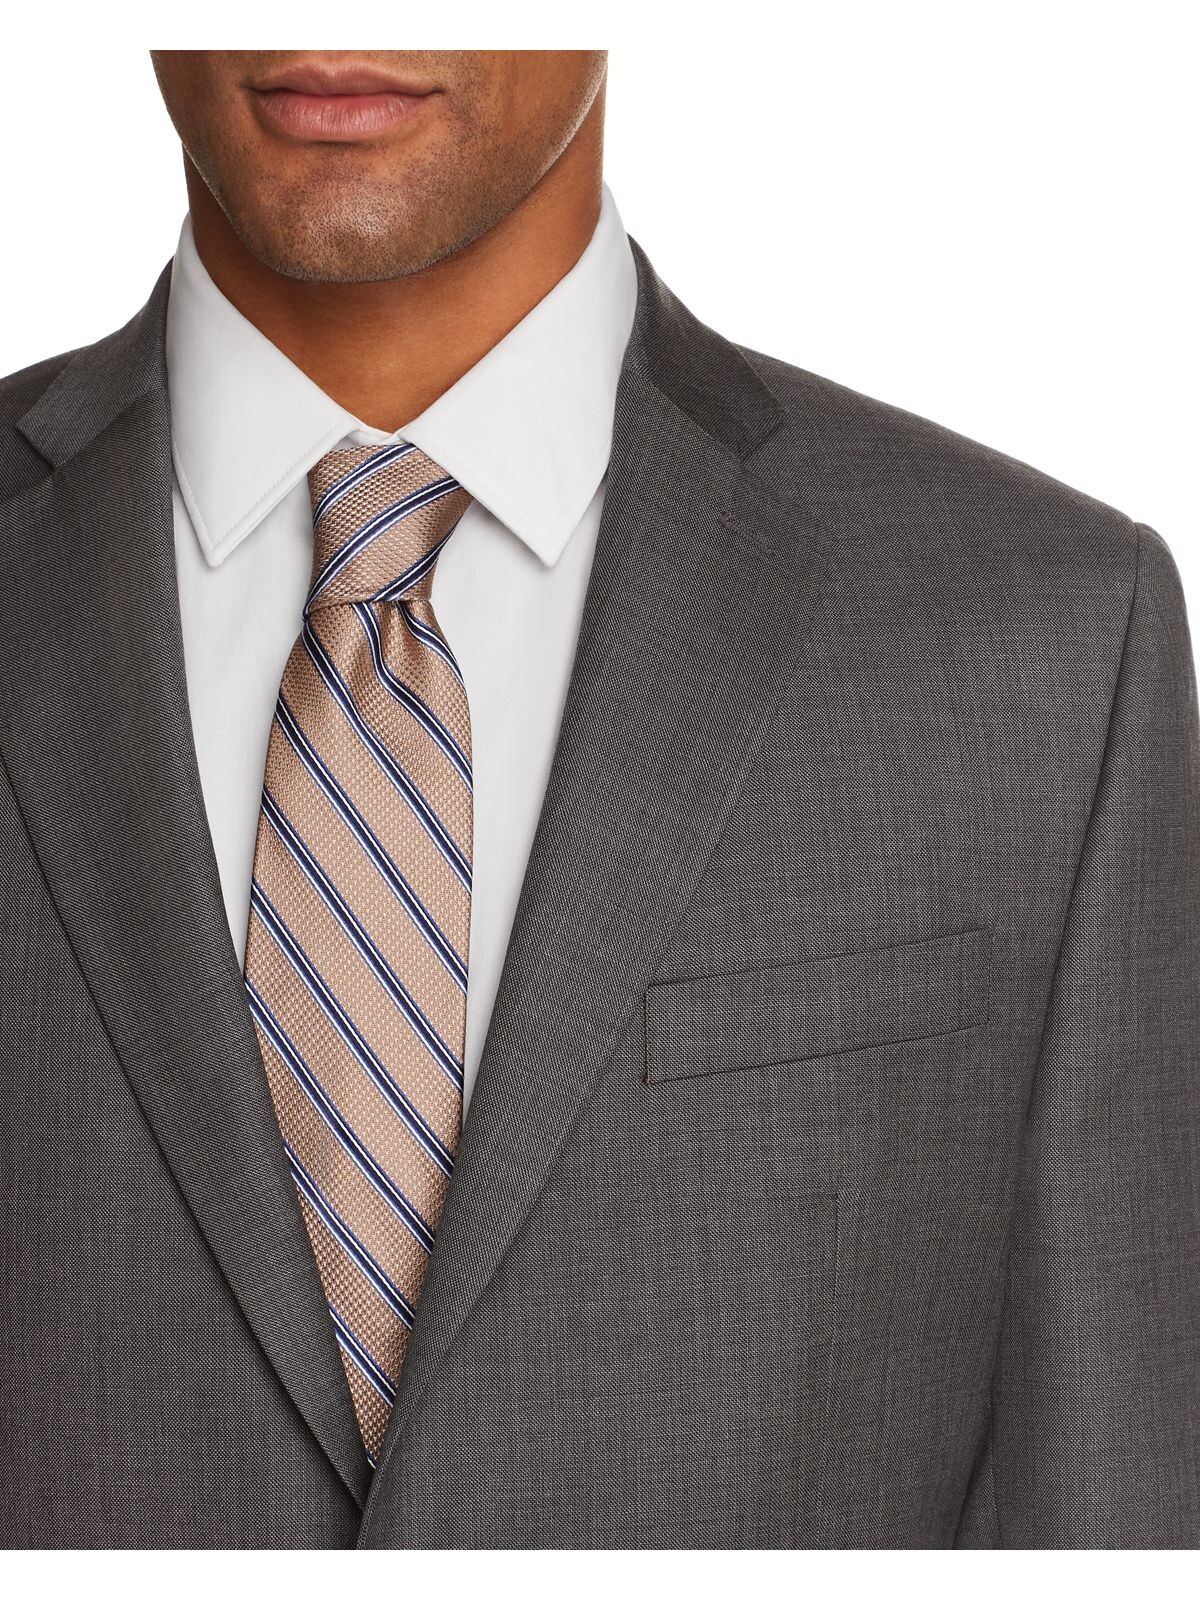 MICHAEL KORS Mens Sharkskin Gray Single Breasted, Classic Fit Wool Blend Blazer 40 - image 3 of 4